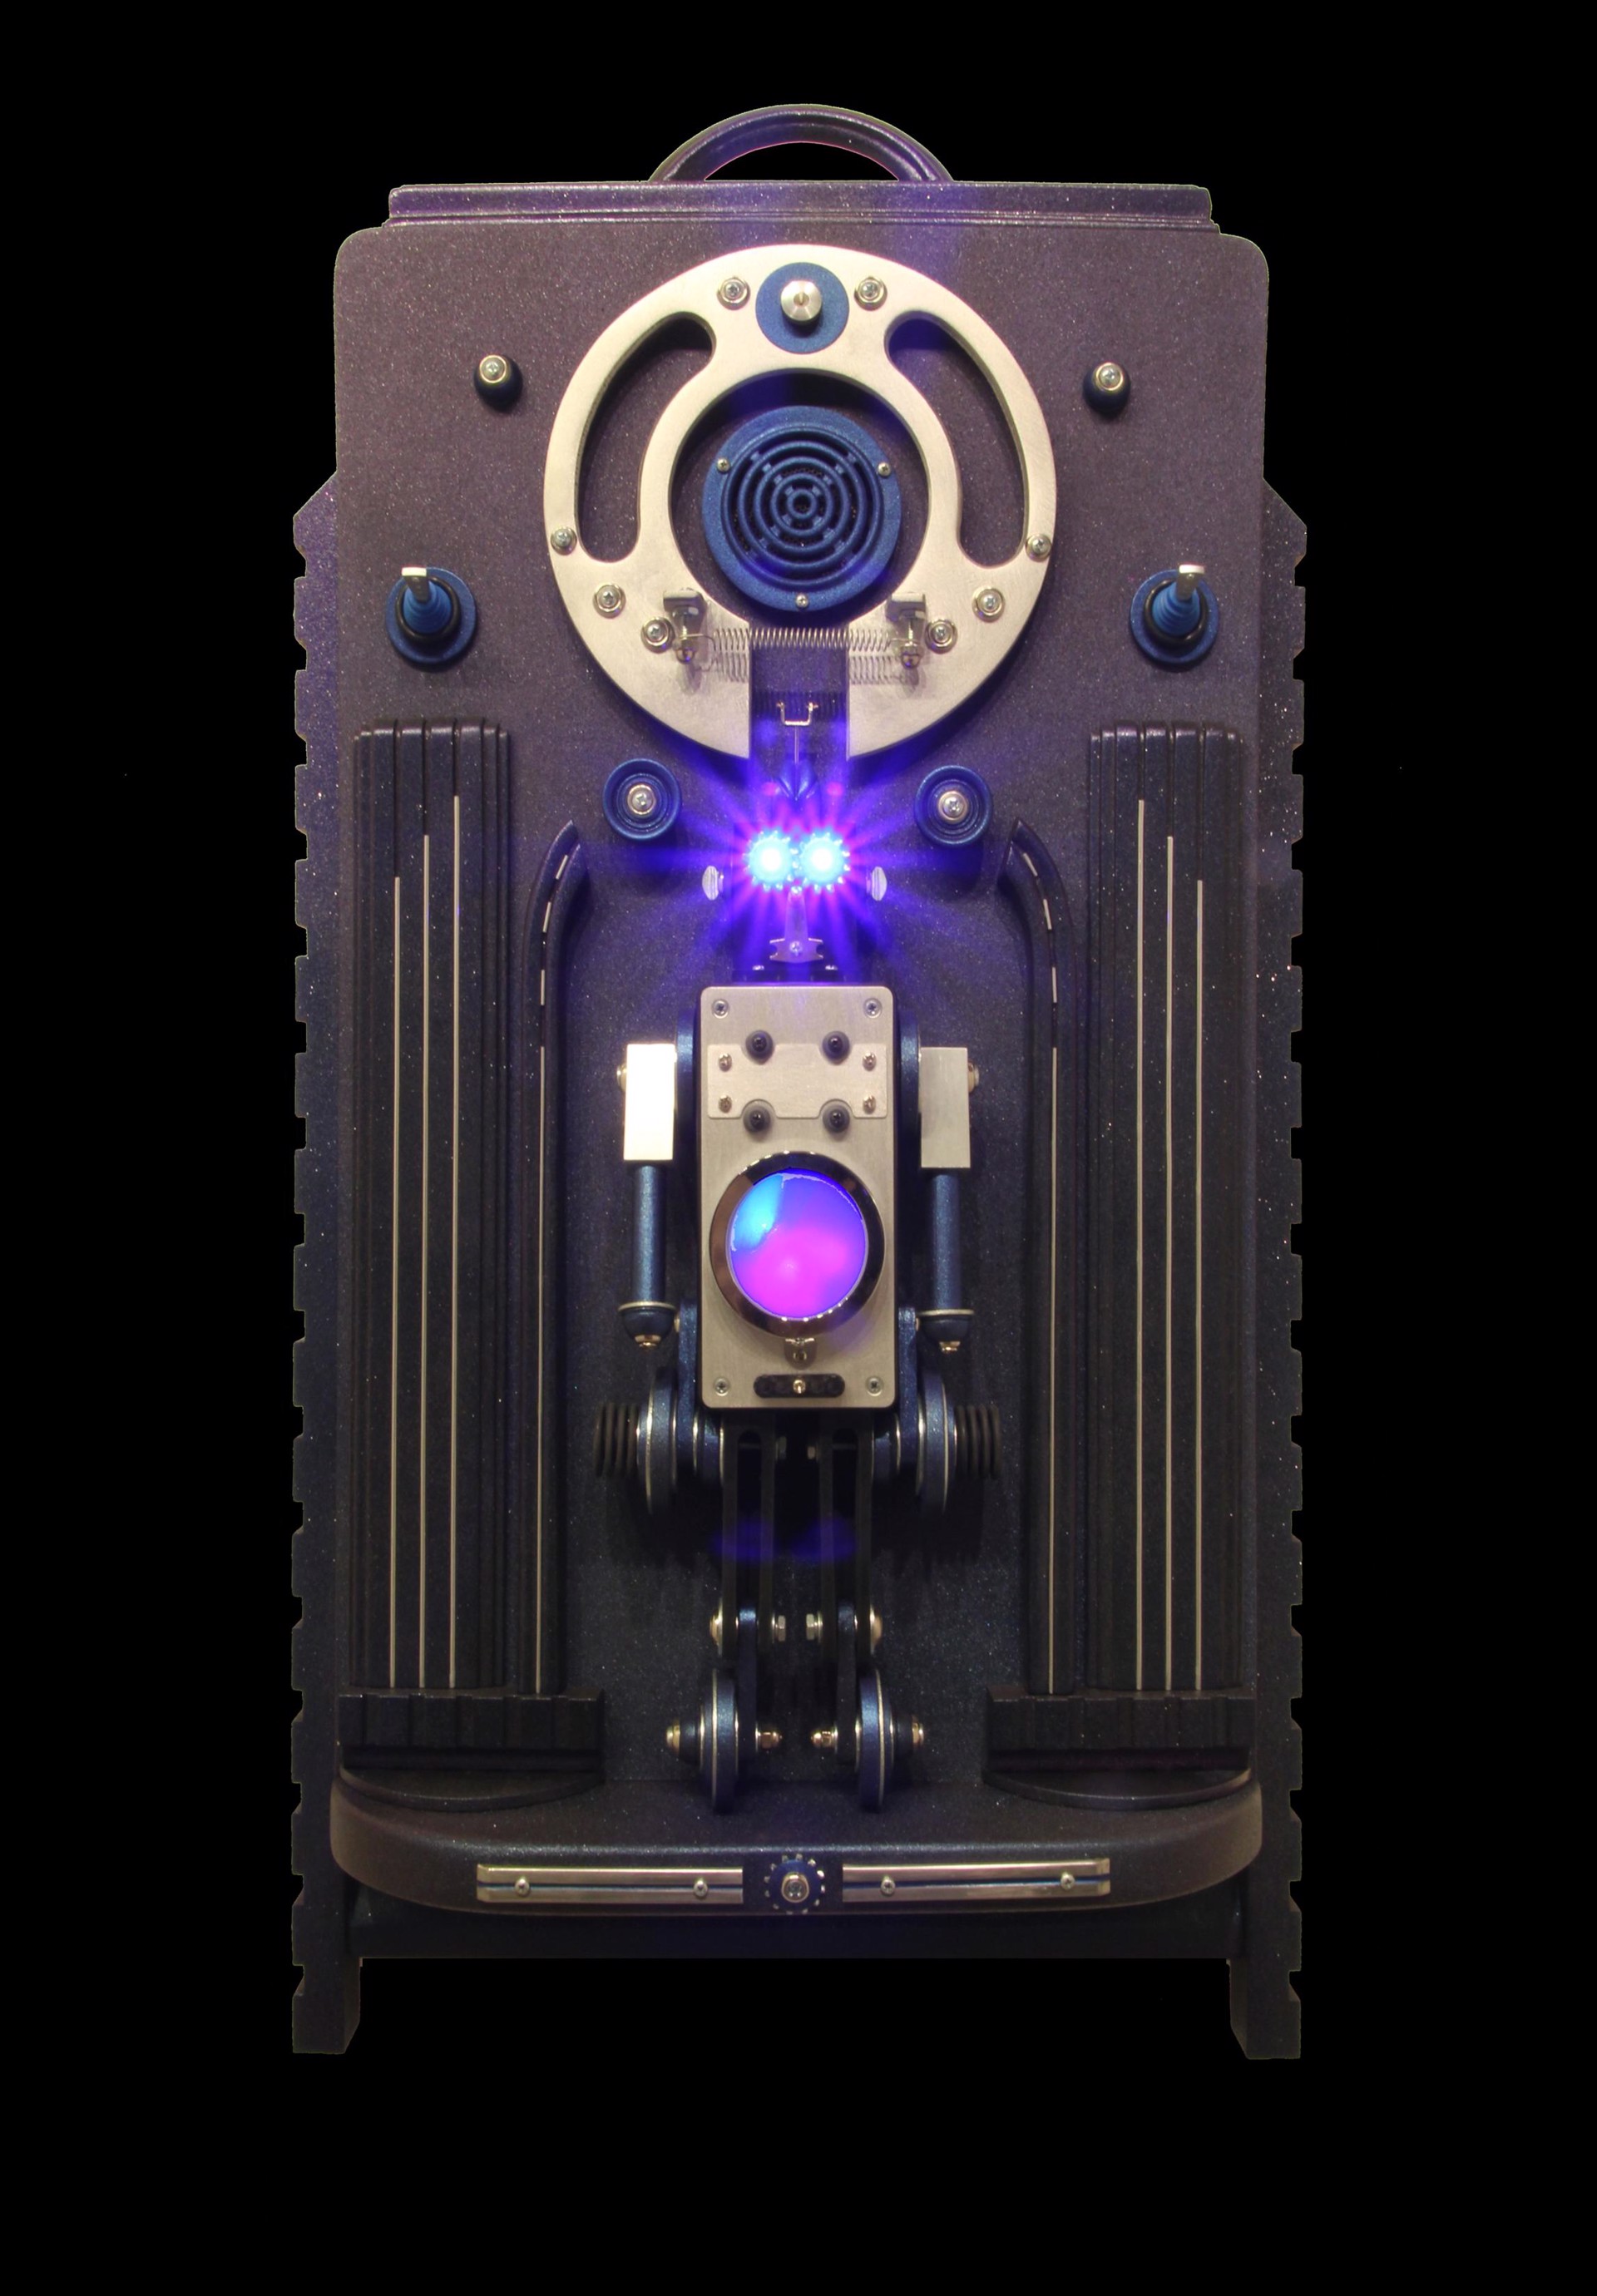 "Neo-Deco-Bot" by Gary Webernick